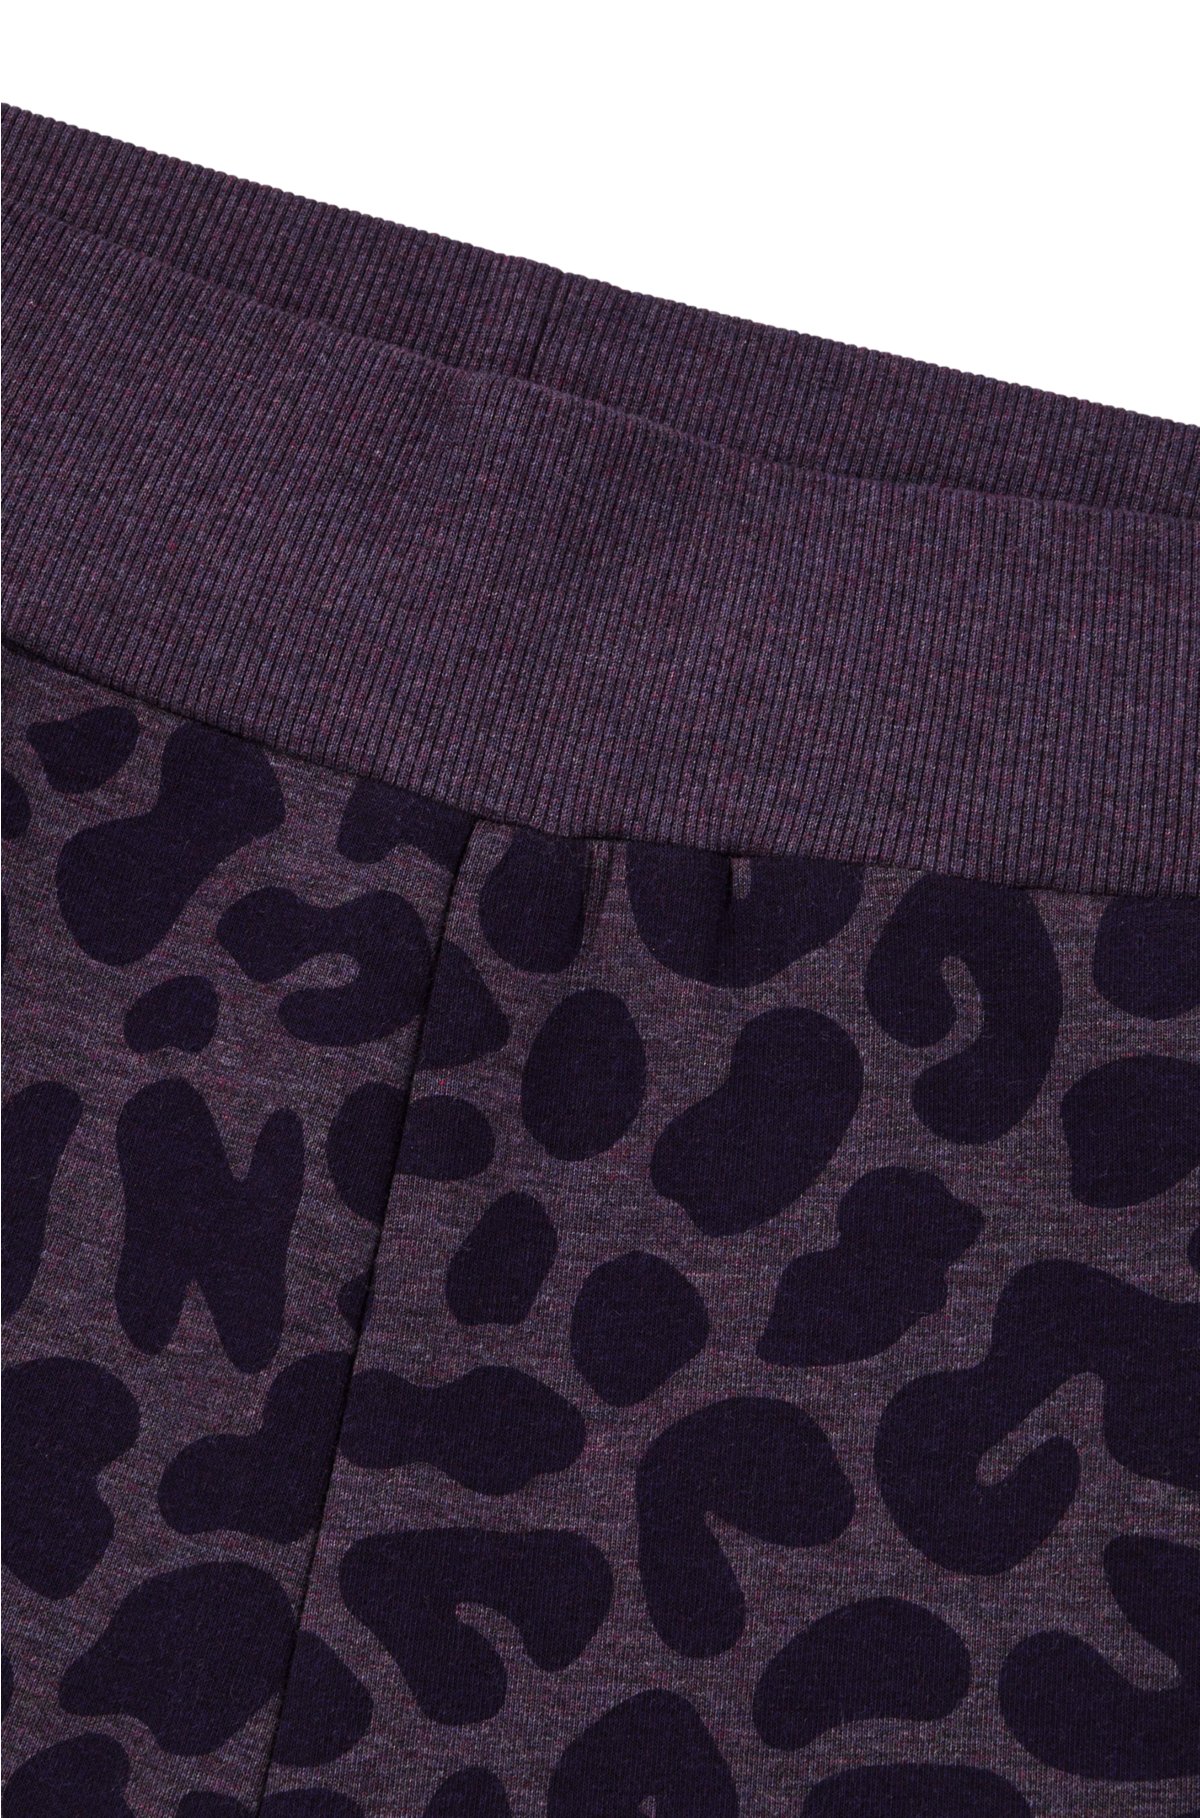 NAOMI x BOSS cotton-blend tracksuit bottoms with leopard print, Dark Purple